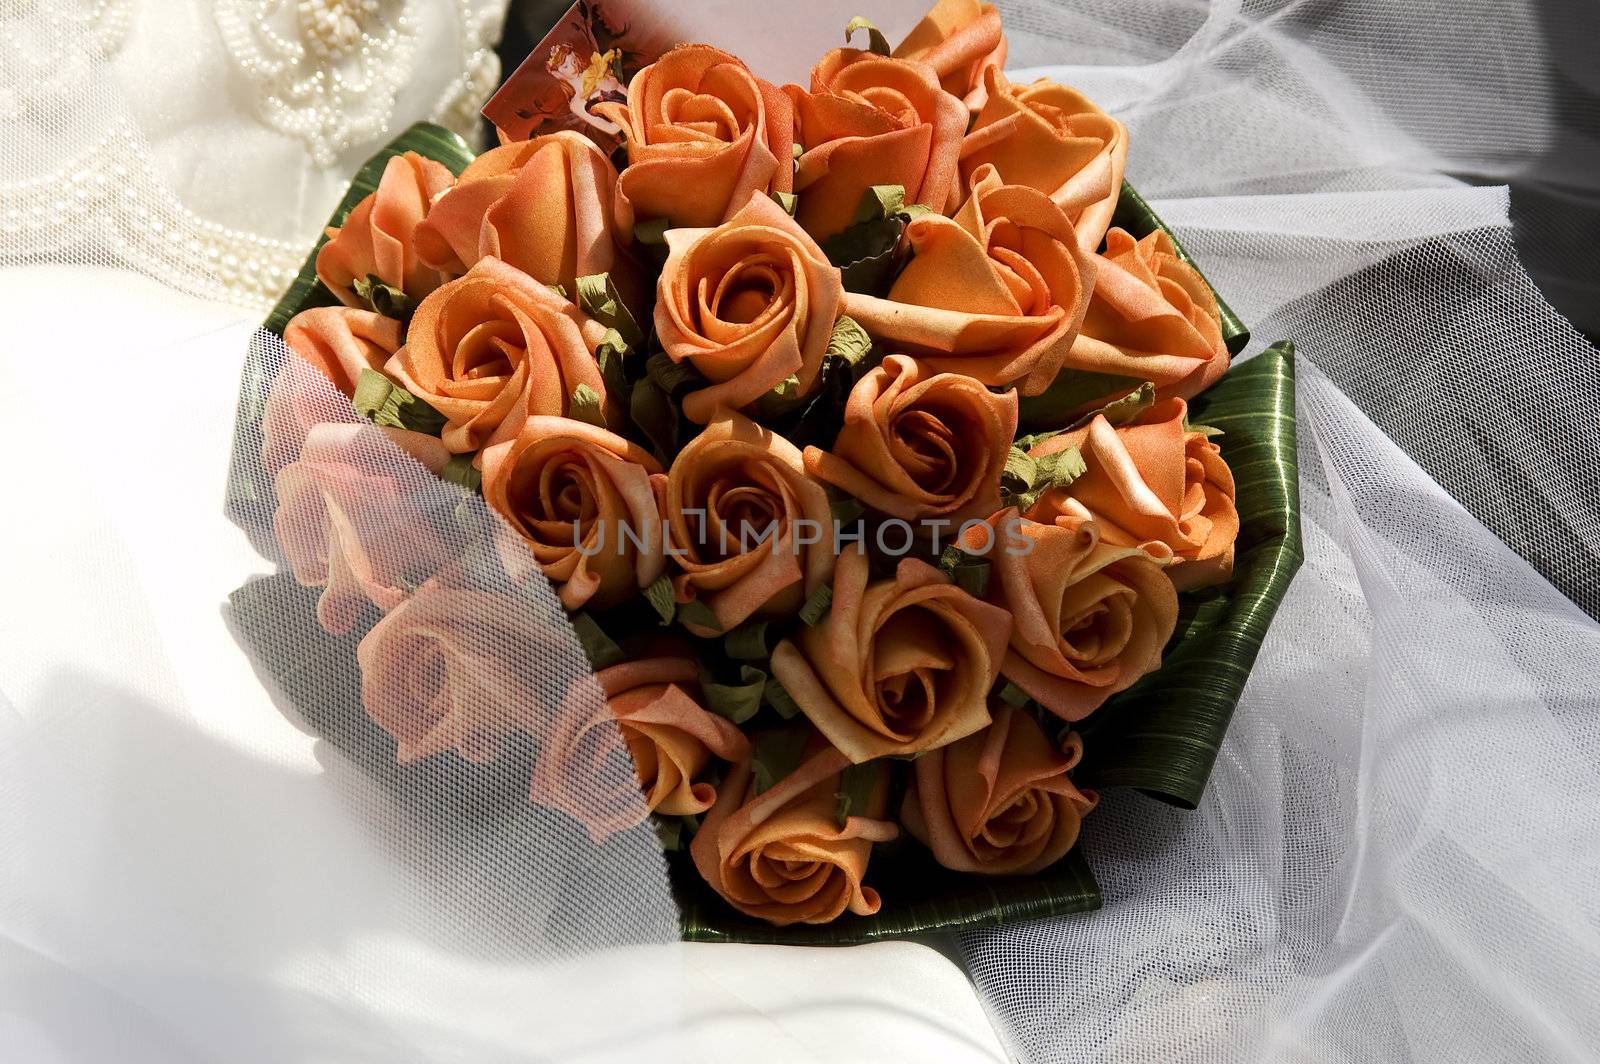 A bouquet of orange roses